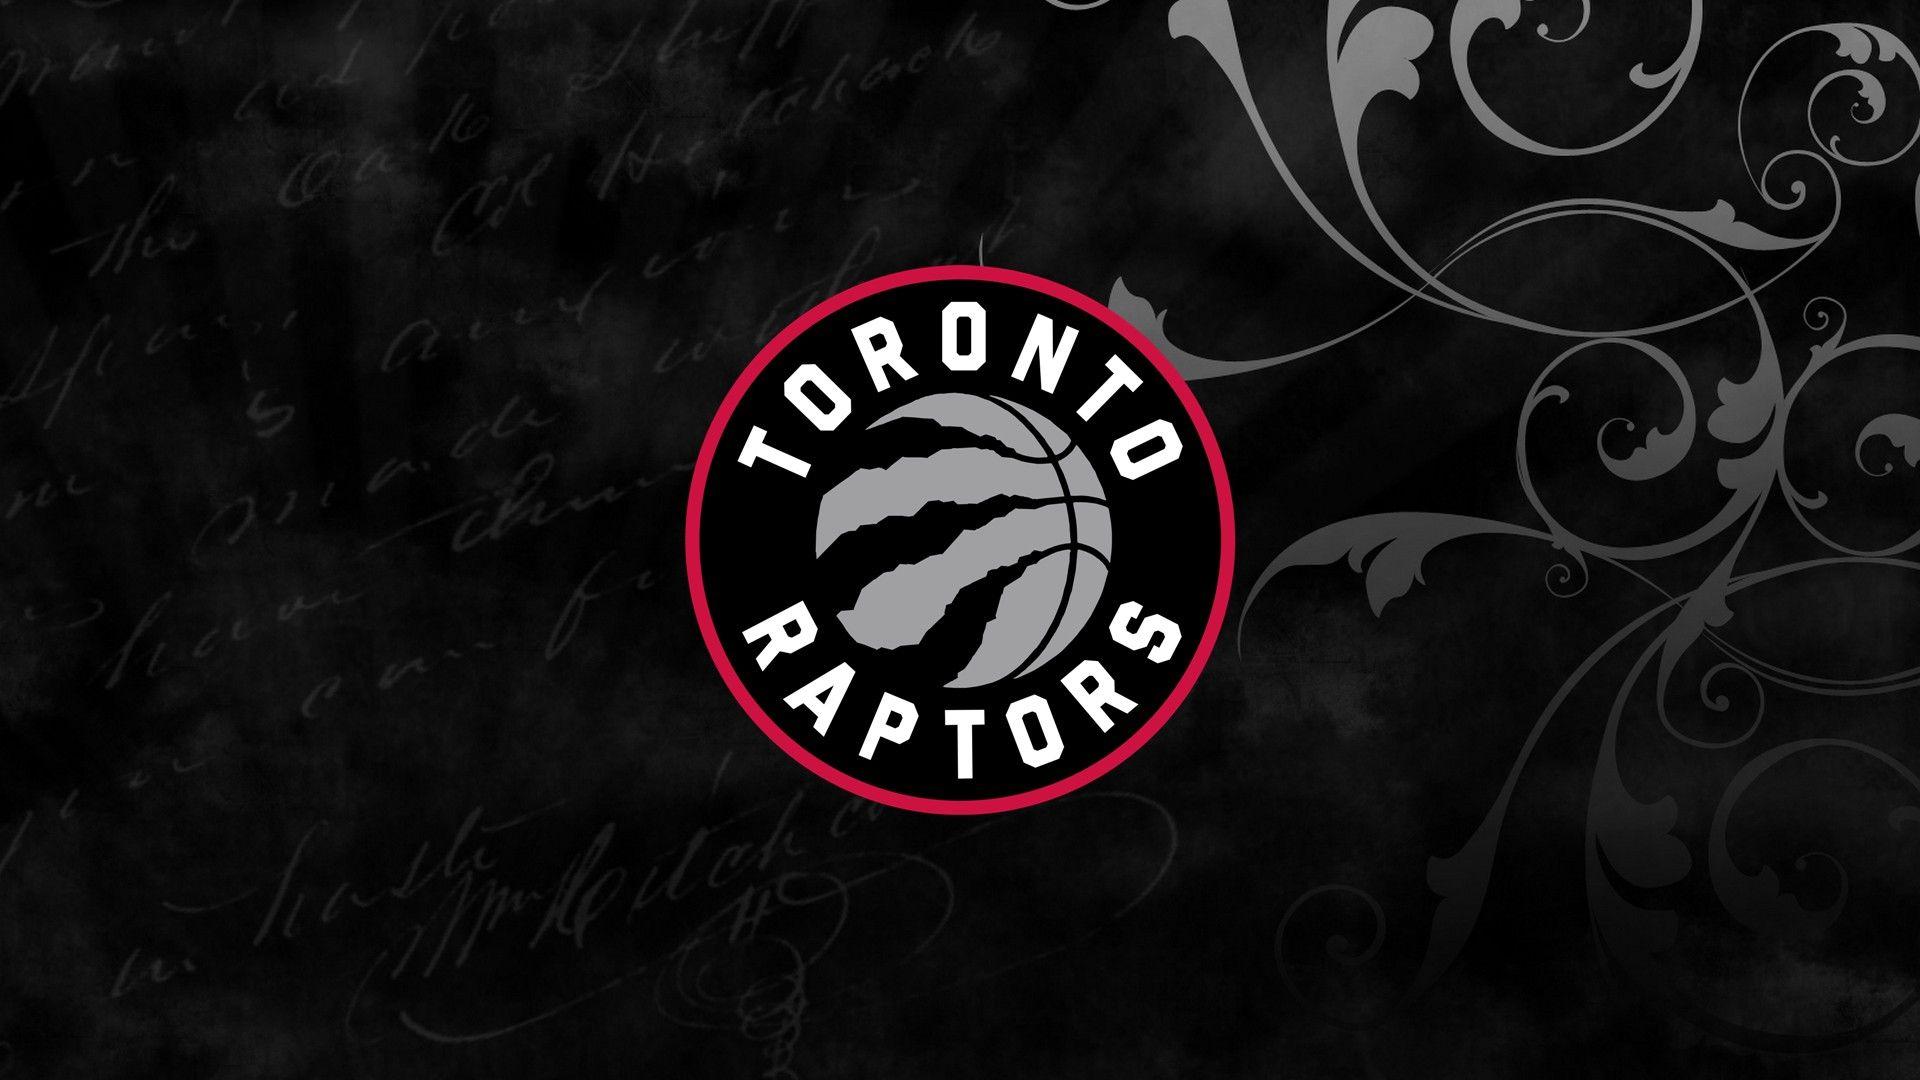 NBA Raptors Desktop Wallpaper. Basketball wallpaper, Basketball wallpaper hd, Raptors